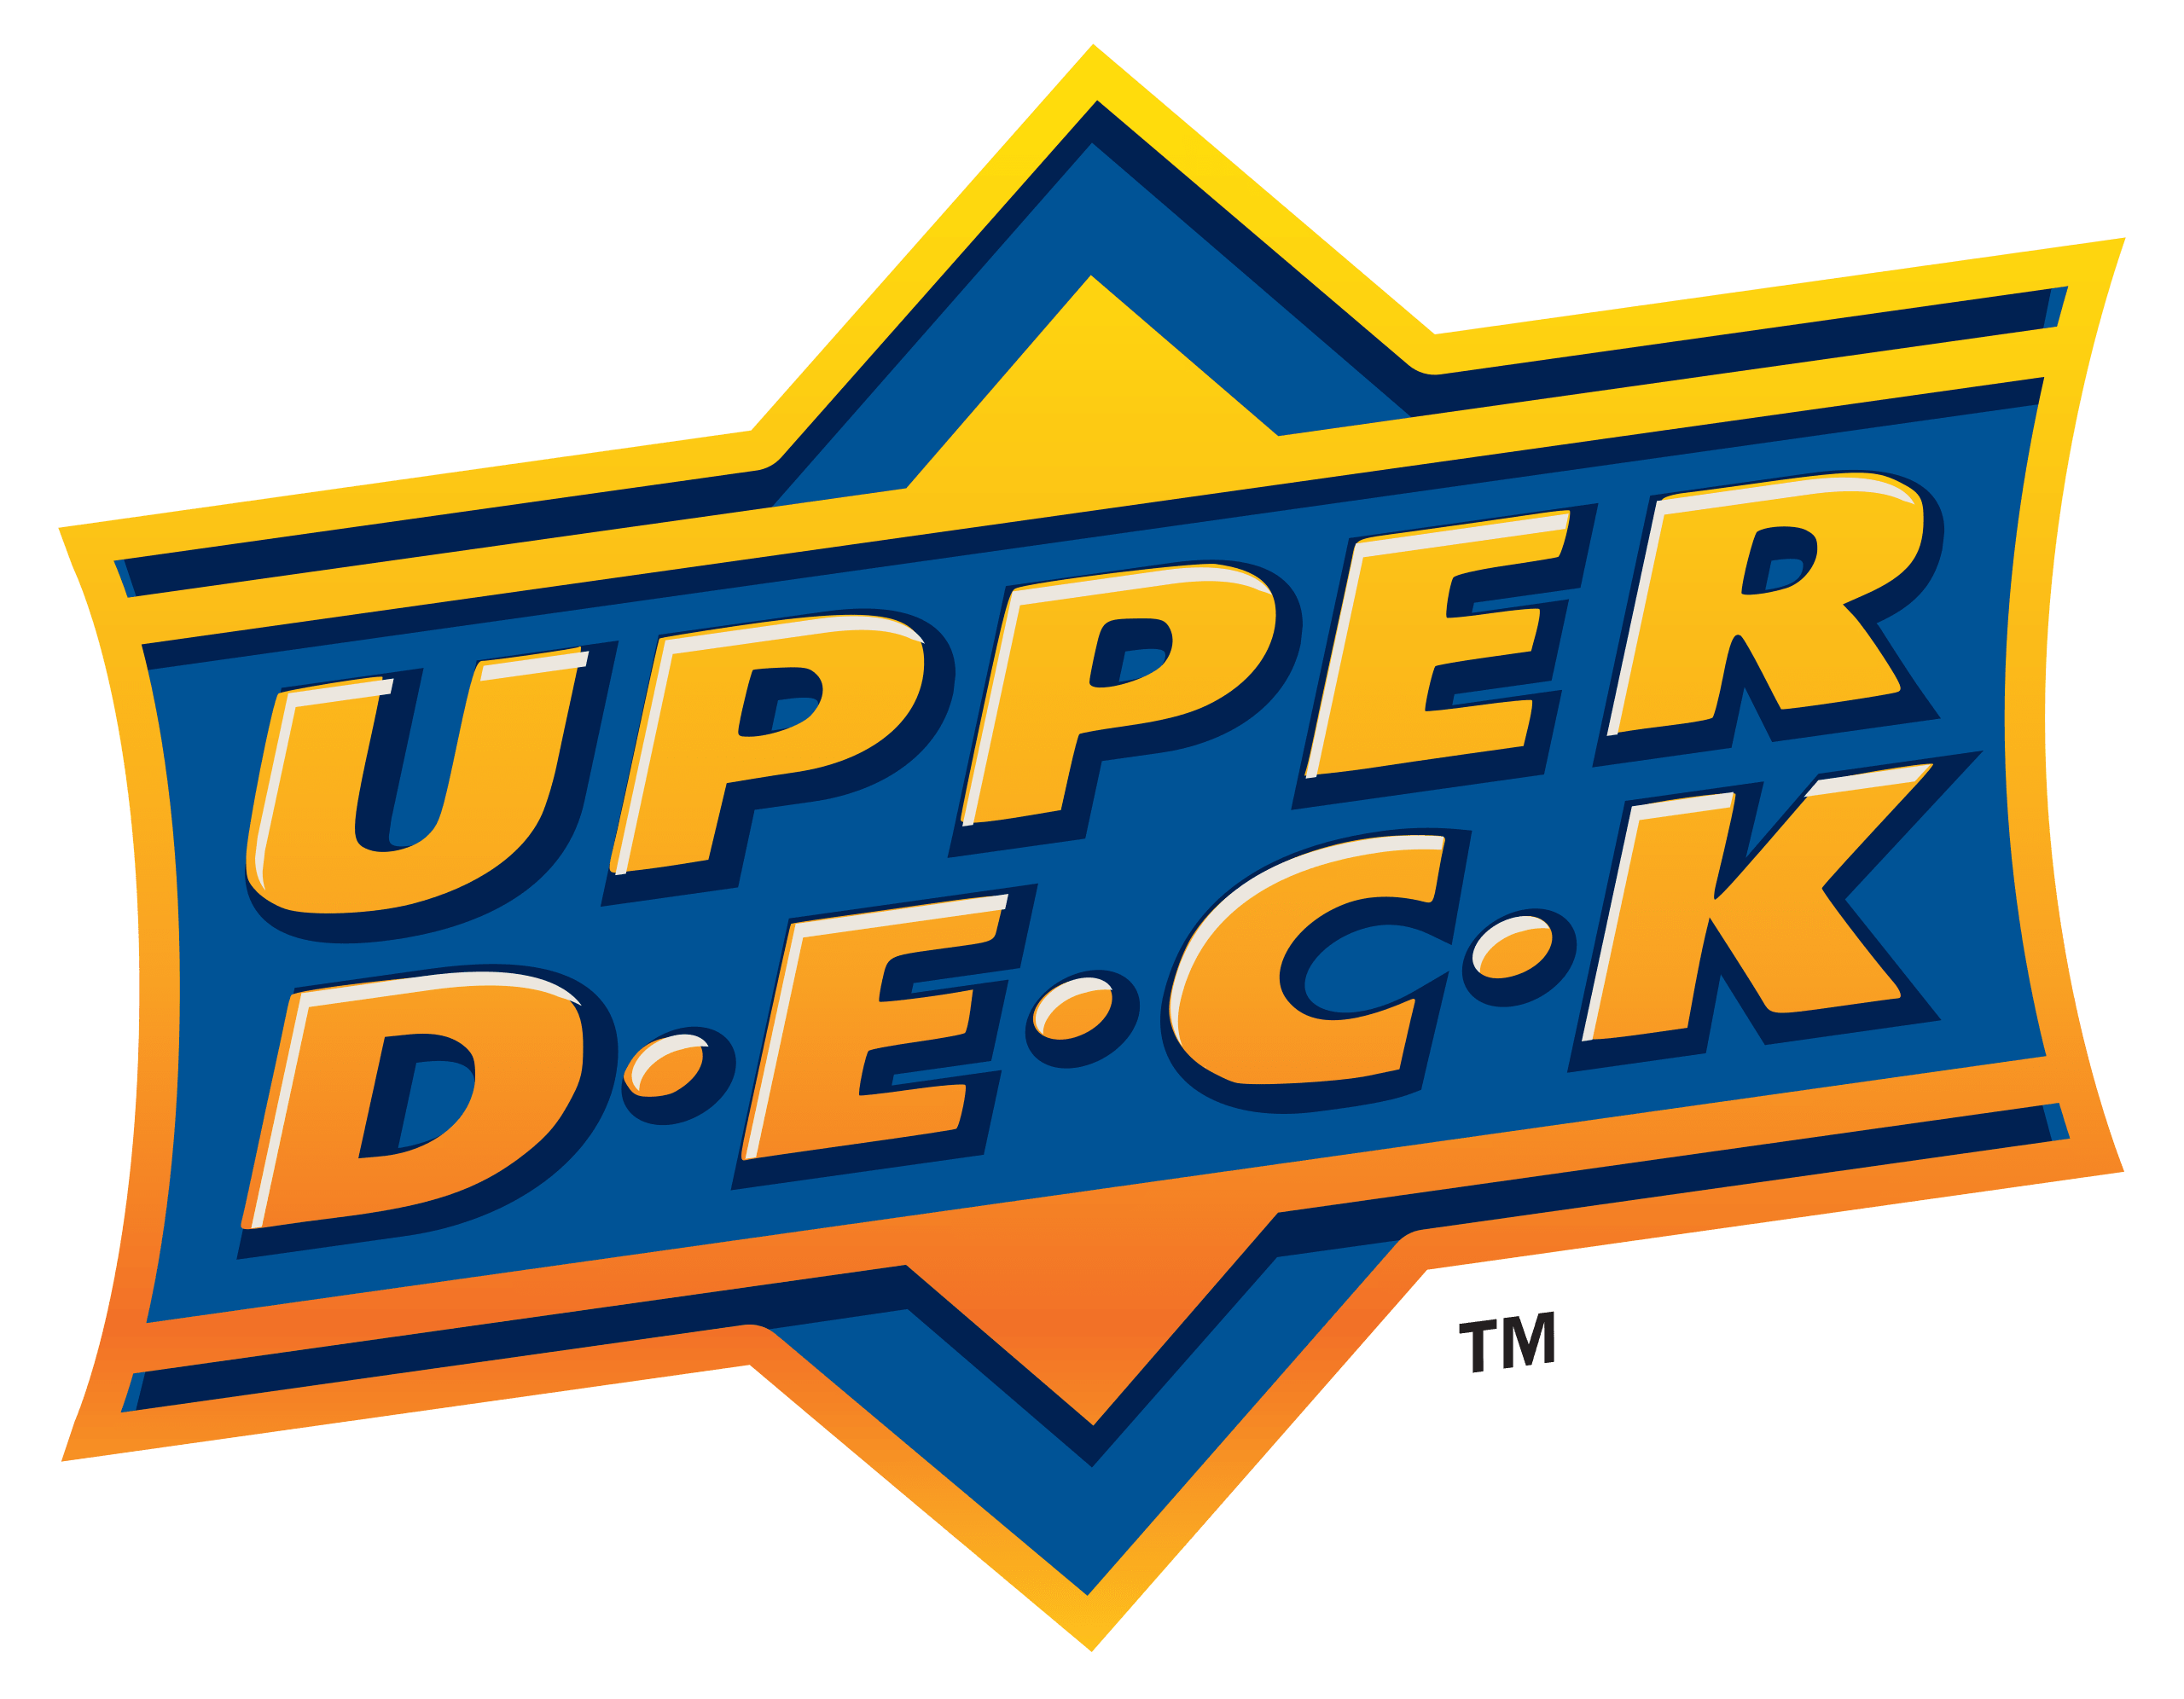 Hockey - 2021/22 - Upper Deck Allure - Hobby Box (8 Packs) - Hobby Champion Inc